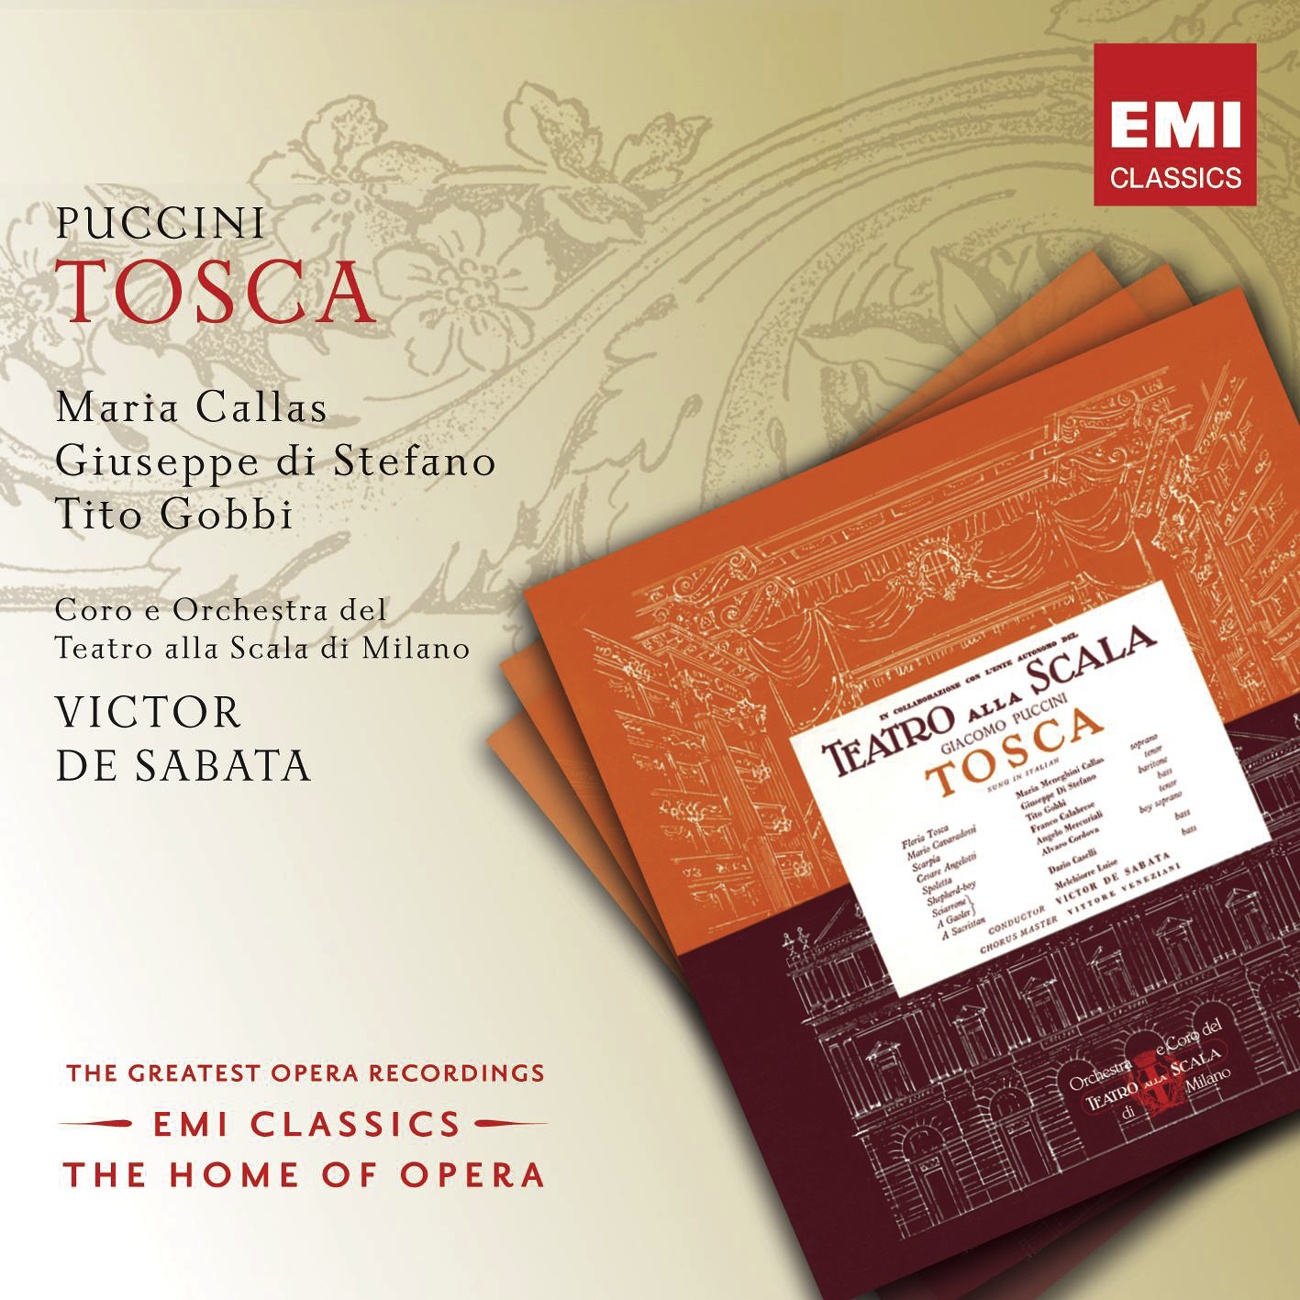 Tosca (2002 Digital Remaster), ACT ONE: Un tal baccano in chiesa! (Scarpia/Sagrestano/Spoletta)